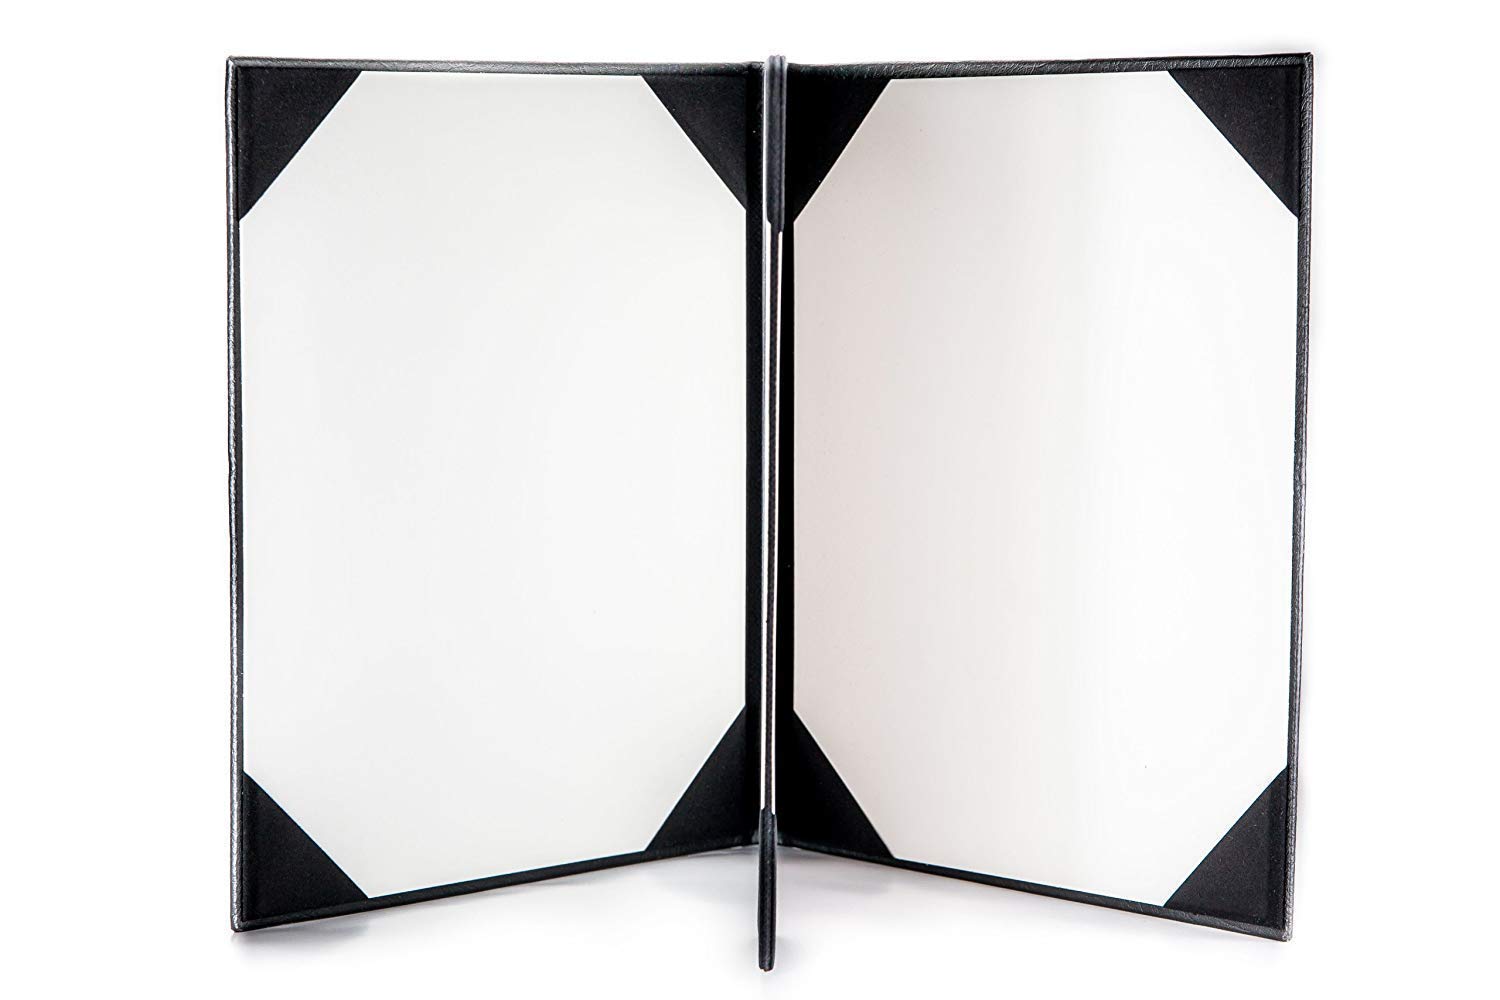 NJ Restaurant Leather Menu Covers Holders 9x12" Inches, 3 panel 4 view folder, Menu Presenters for Restaurants : Black